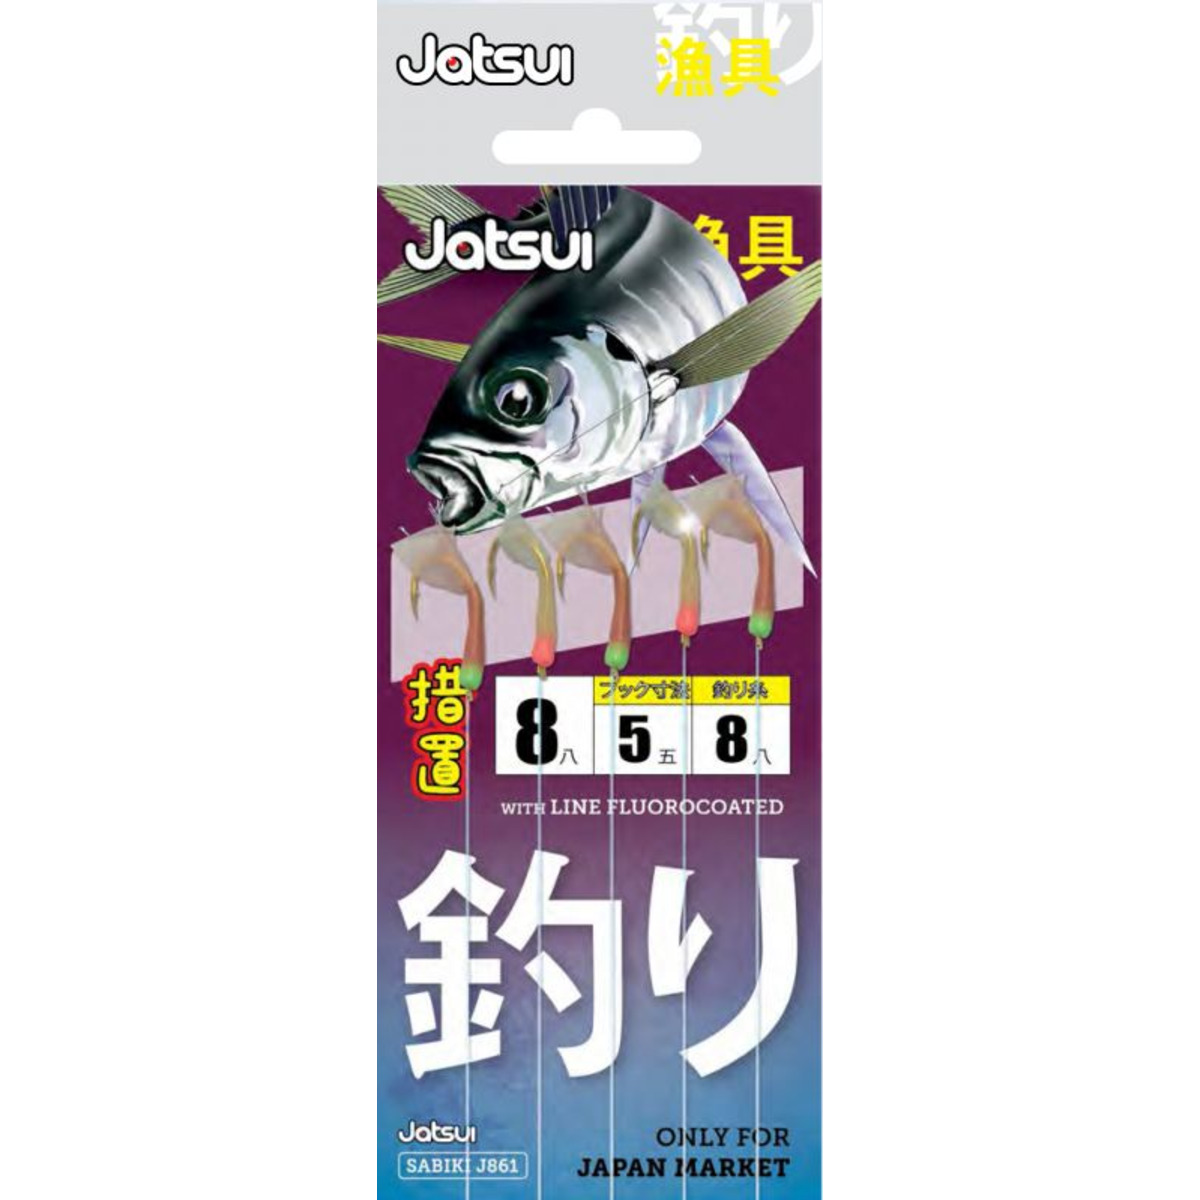 Jatsui Sabiki J861 - #10